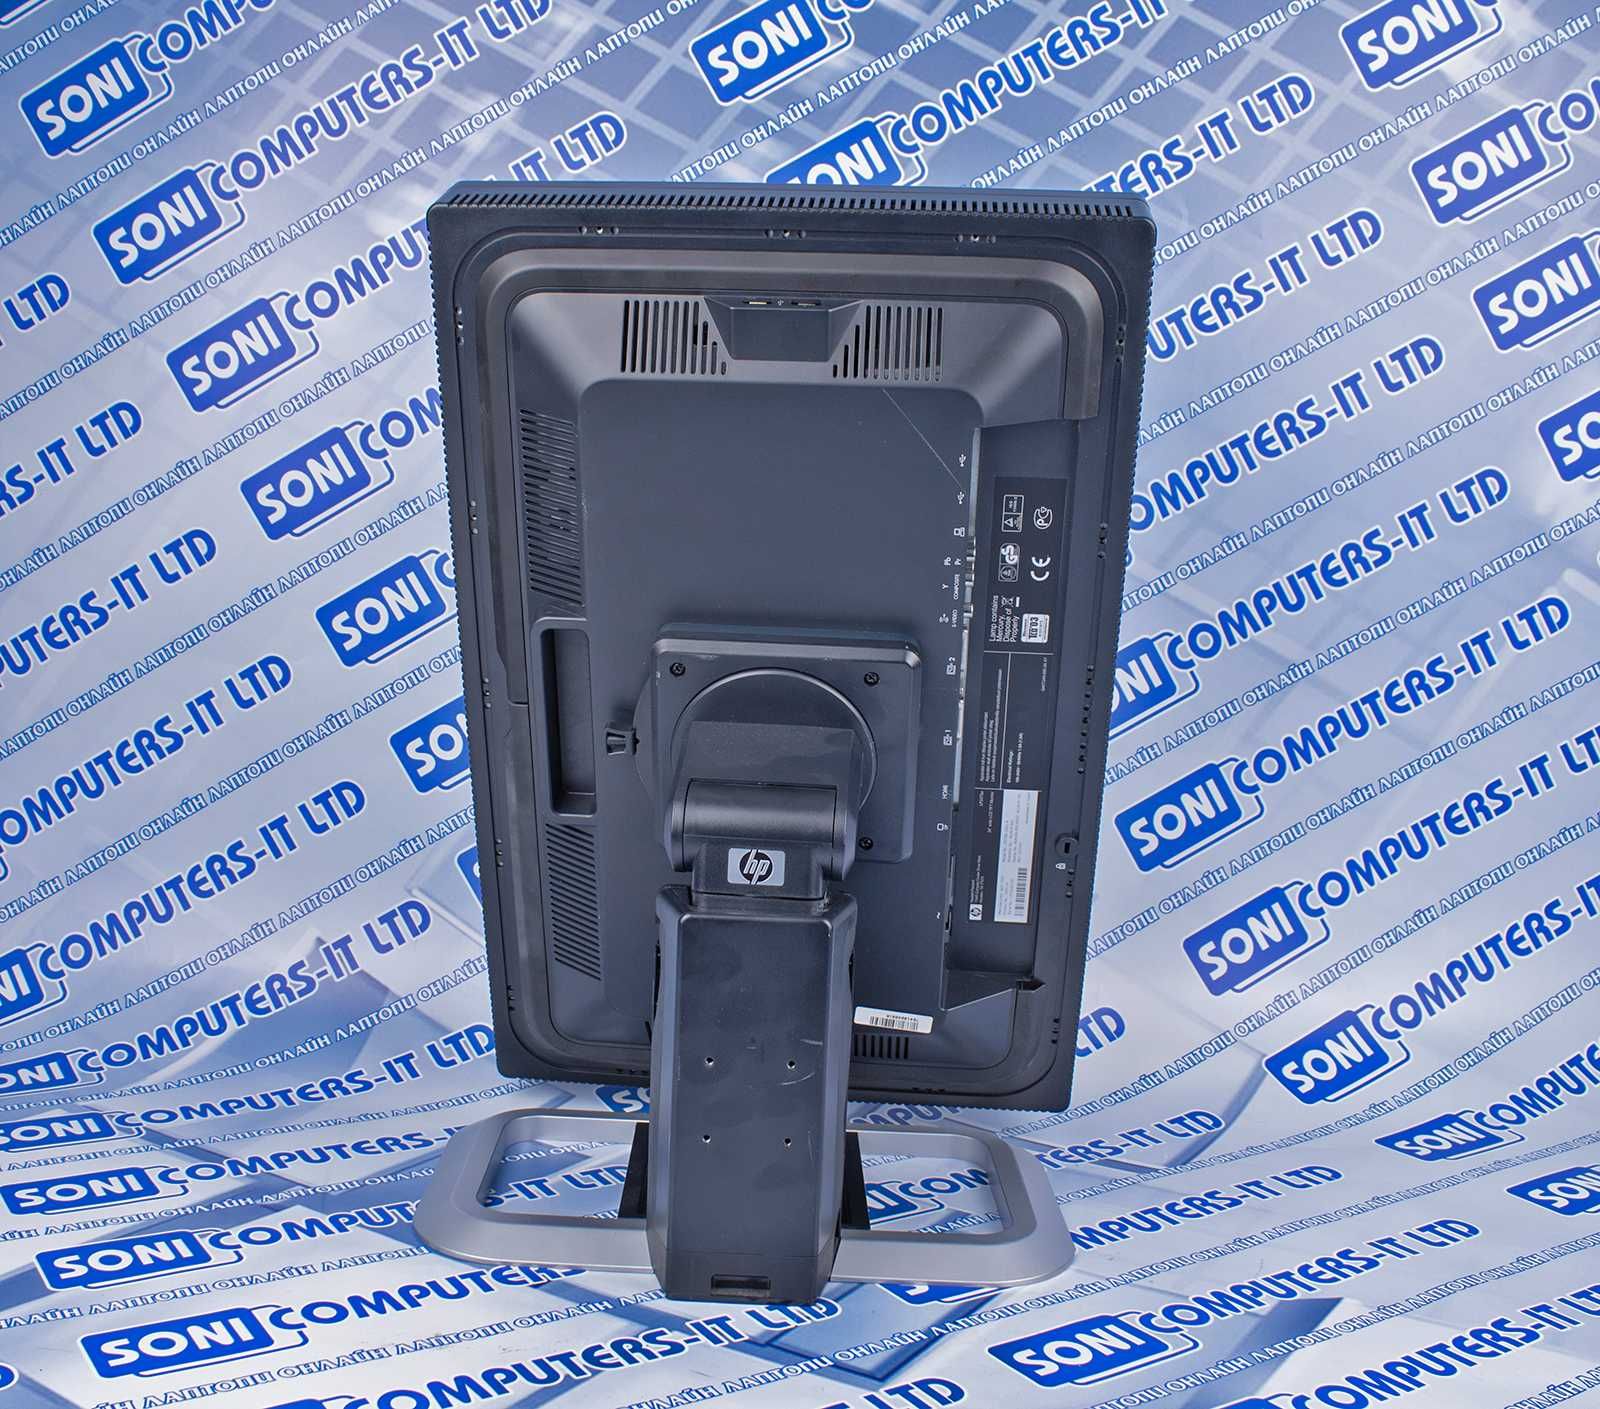 Монитор HP LP2475w 24" wide LCD TFT Monitor